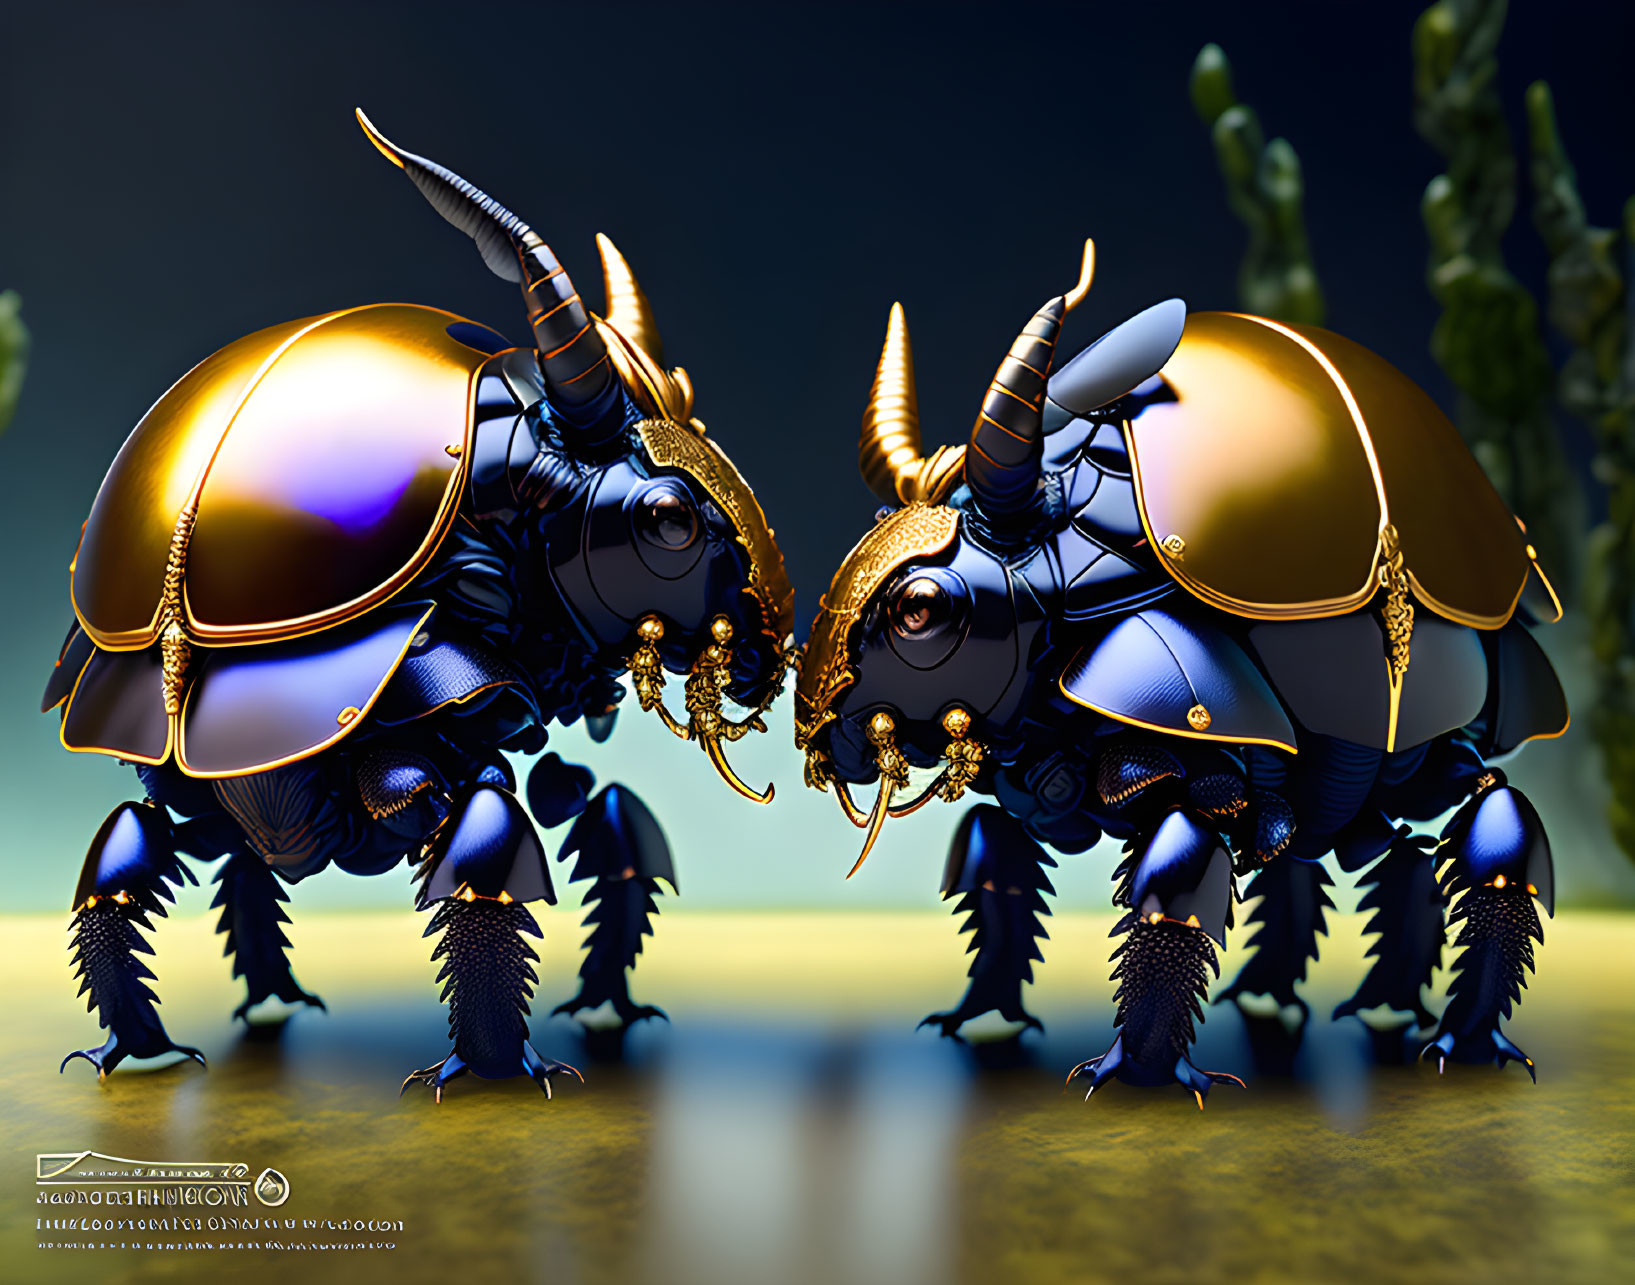 Battle beetles